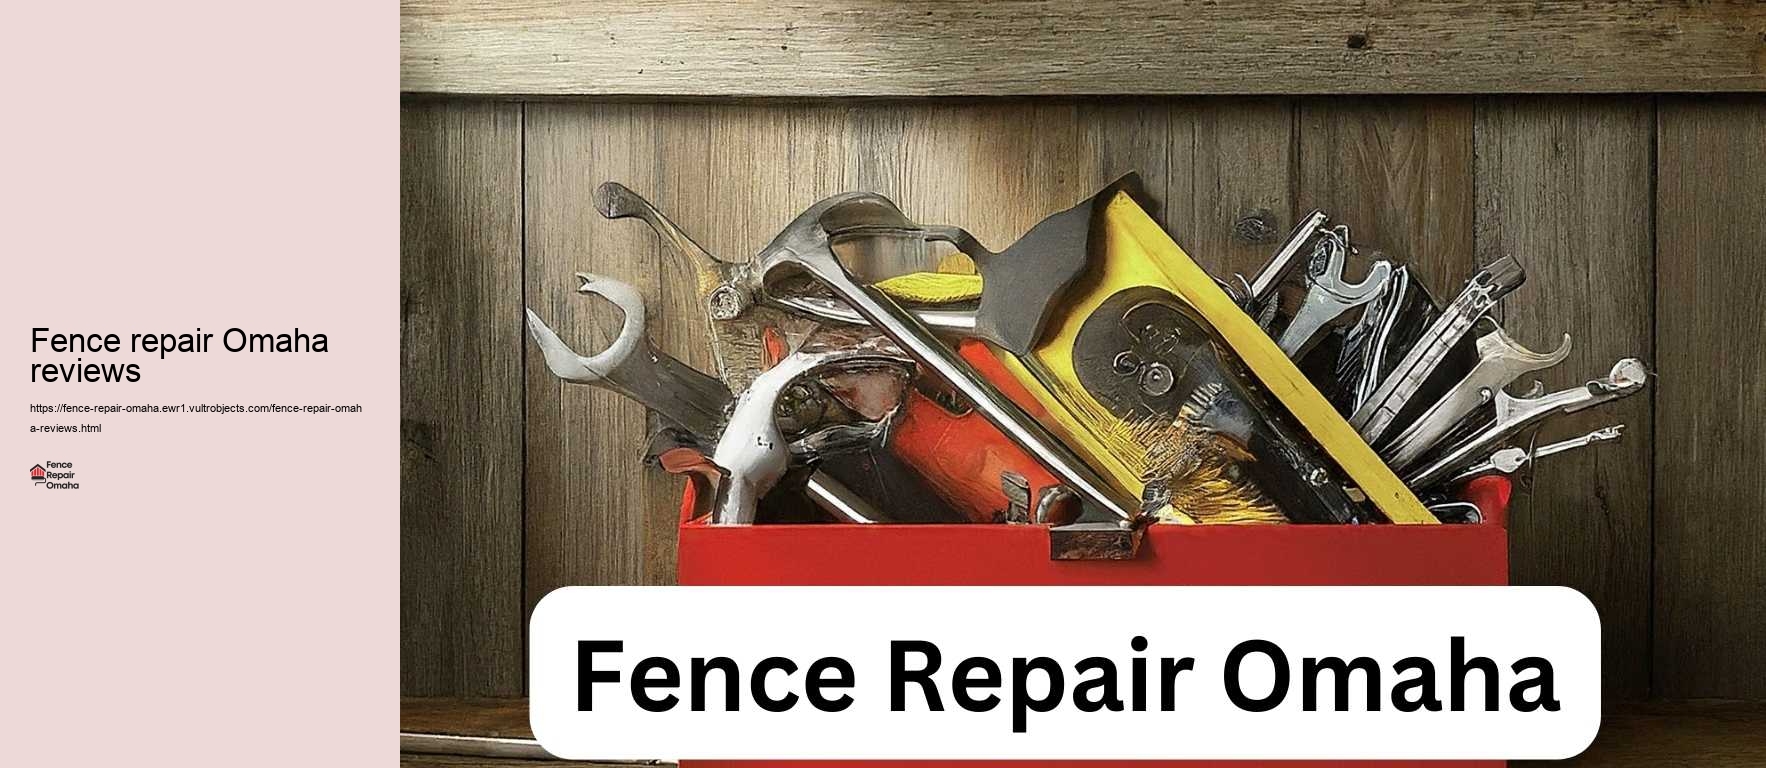 Fence repair Omaha reviews